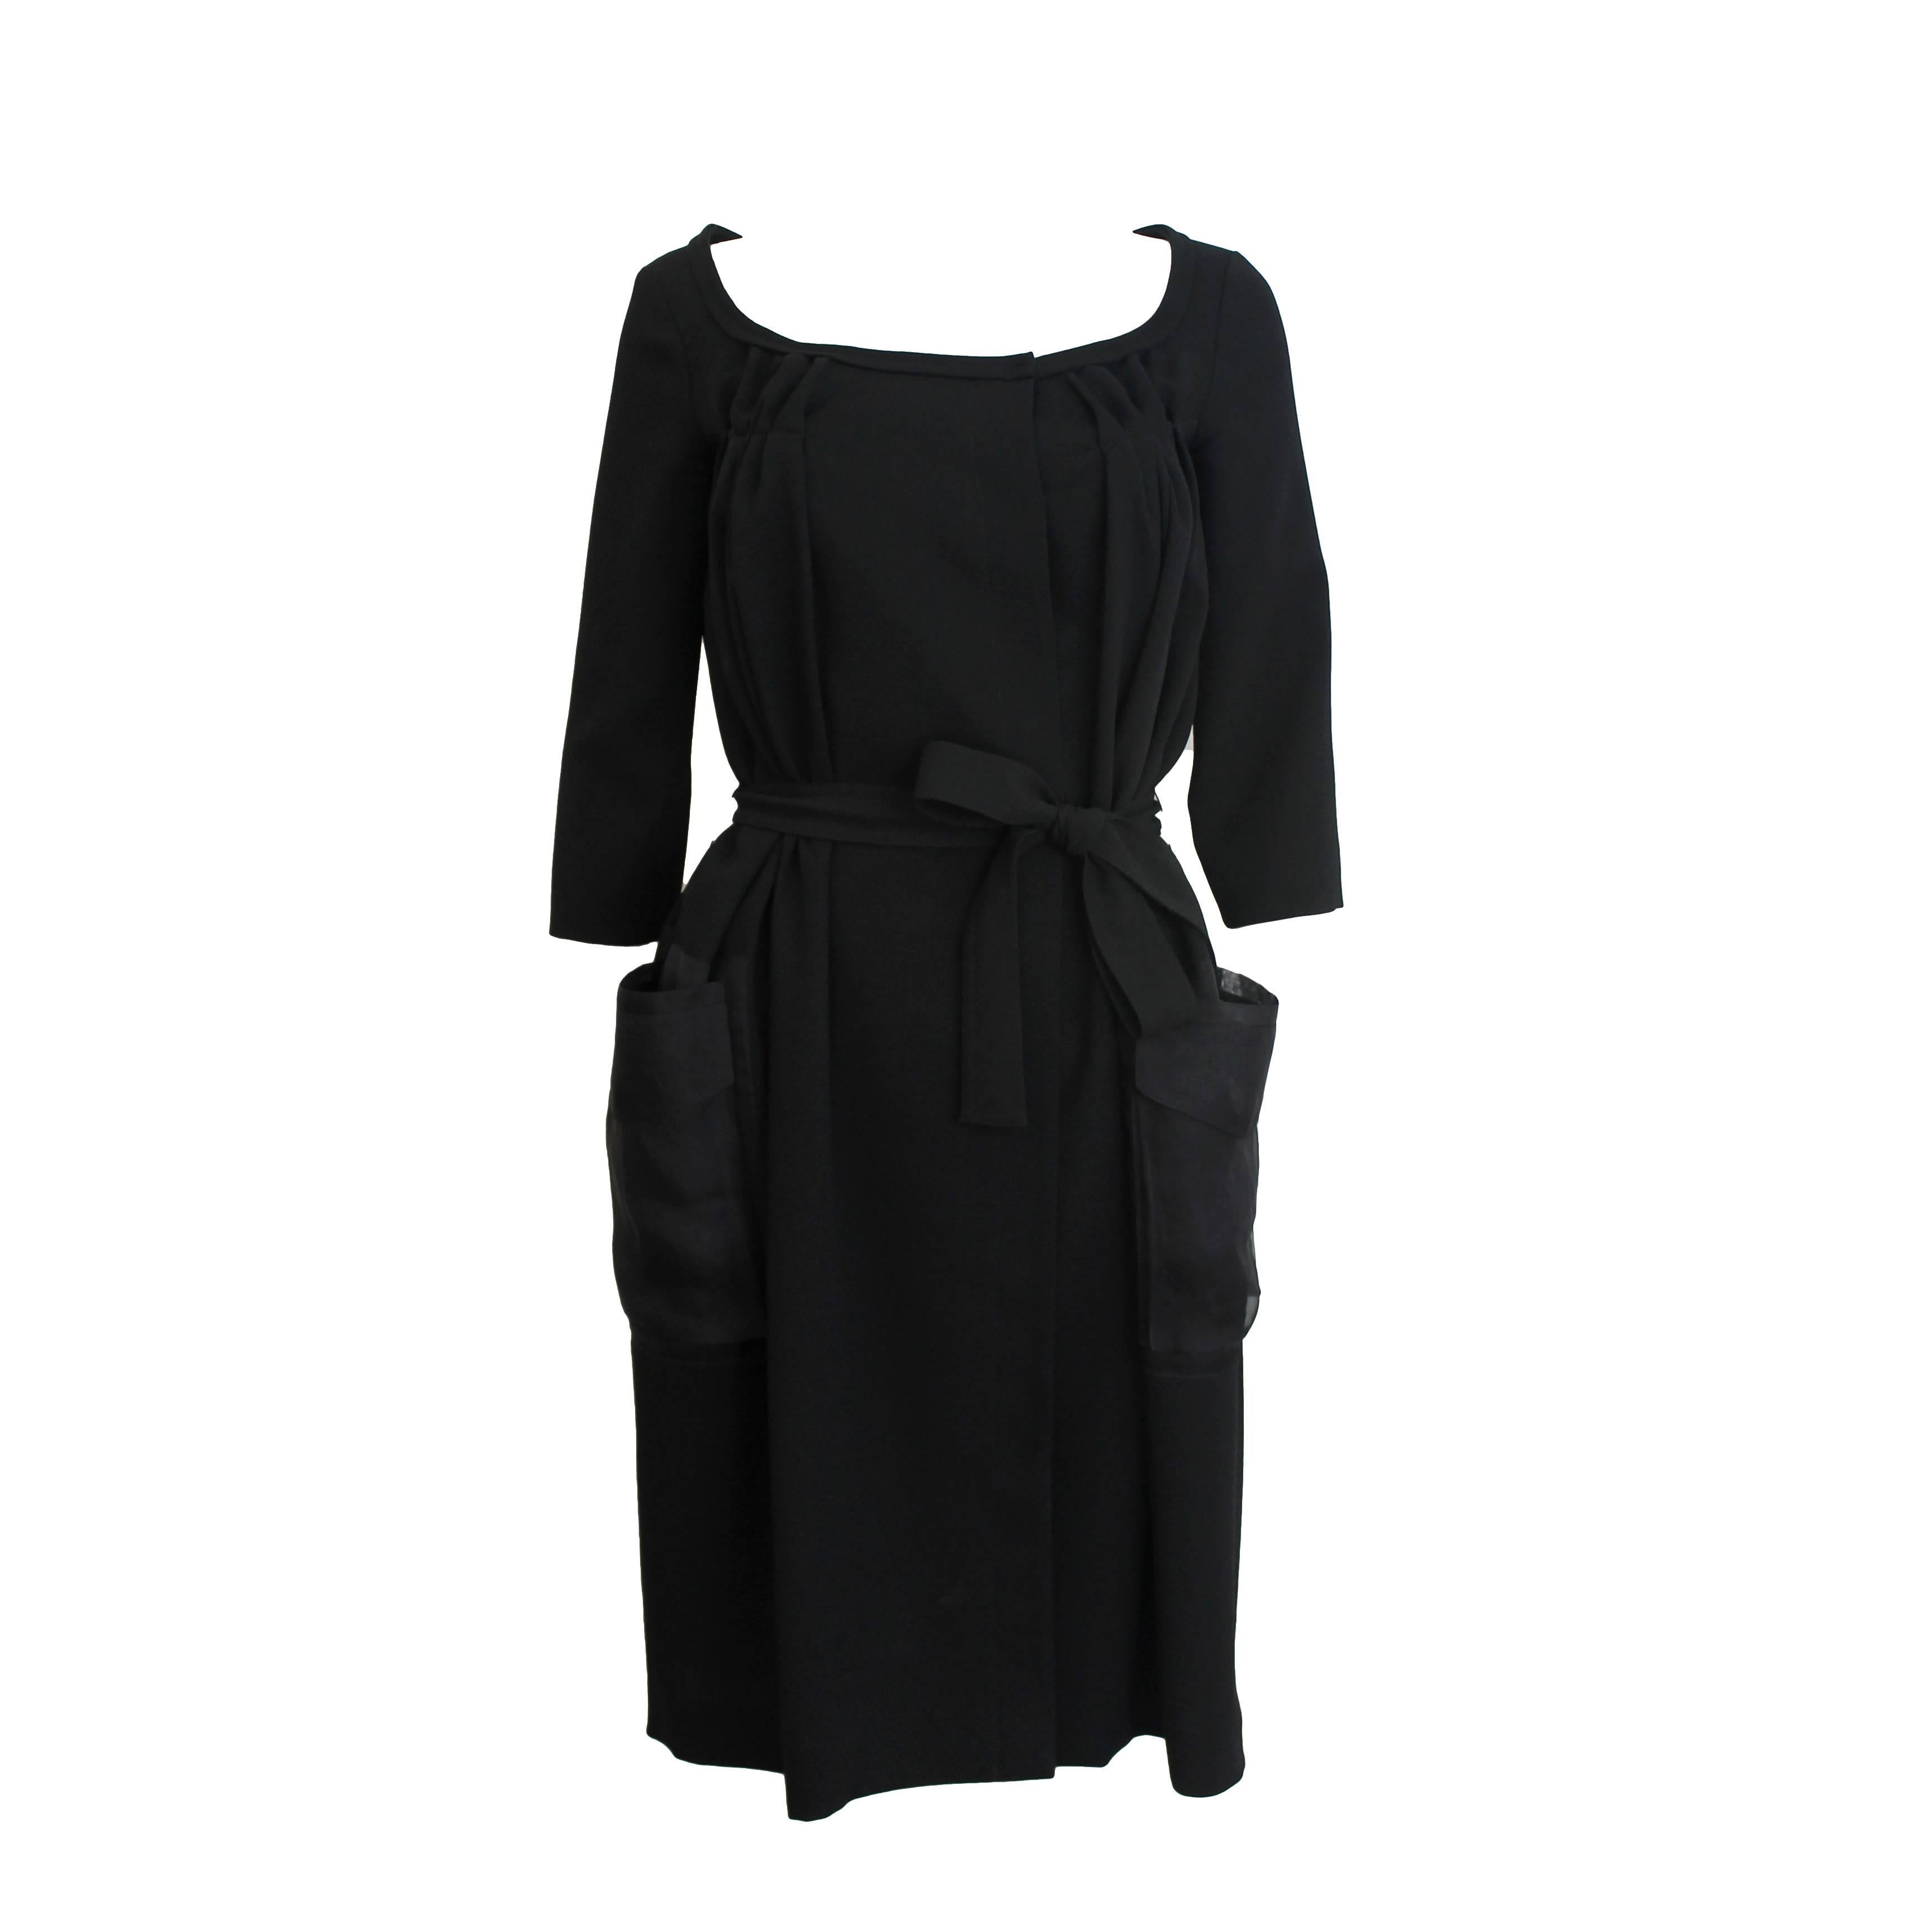 Christian Dior Black Dress with Sheer Pockets